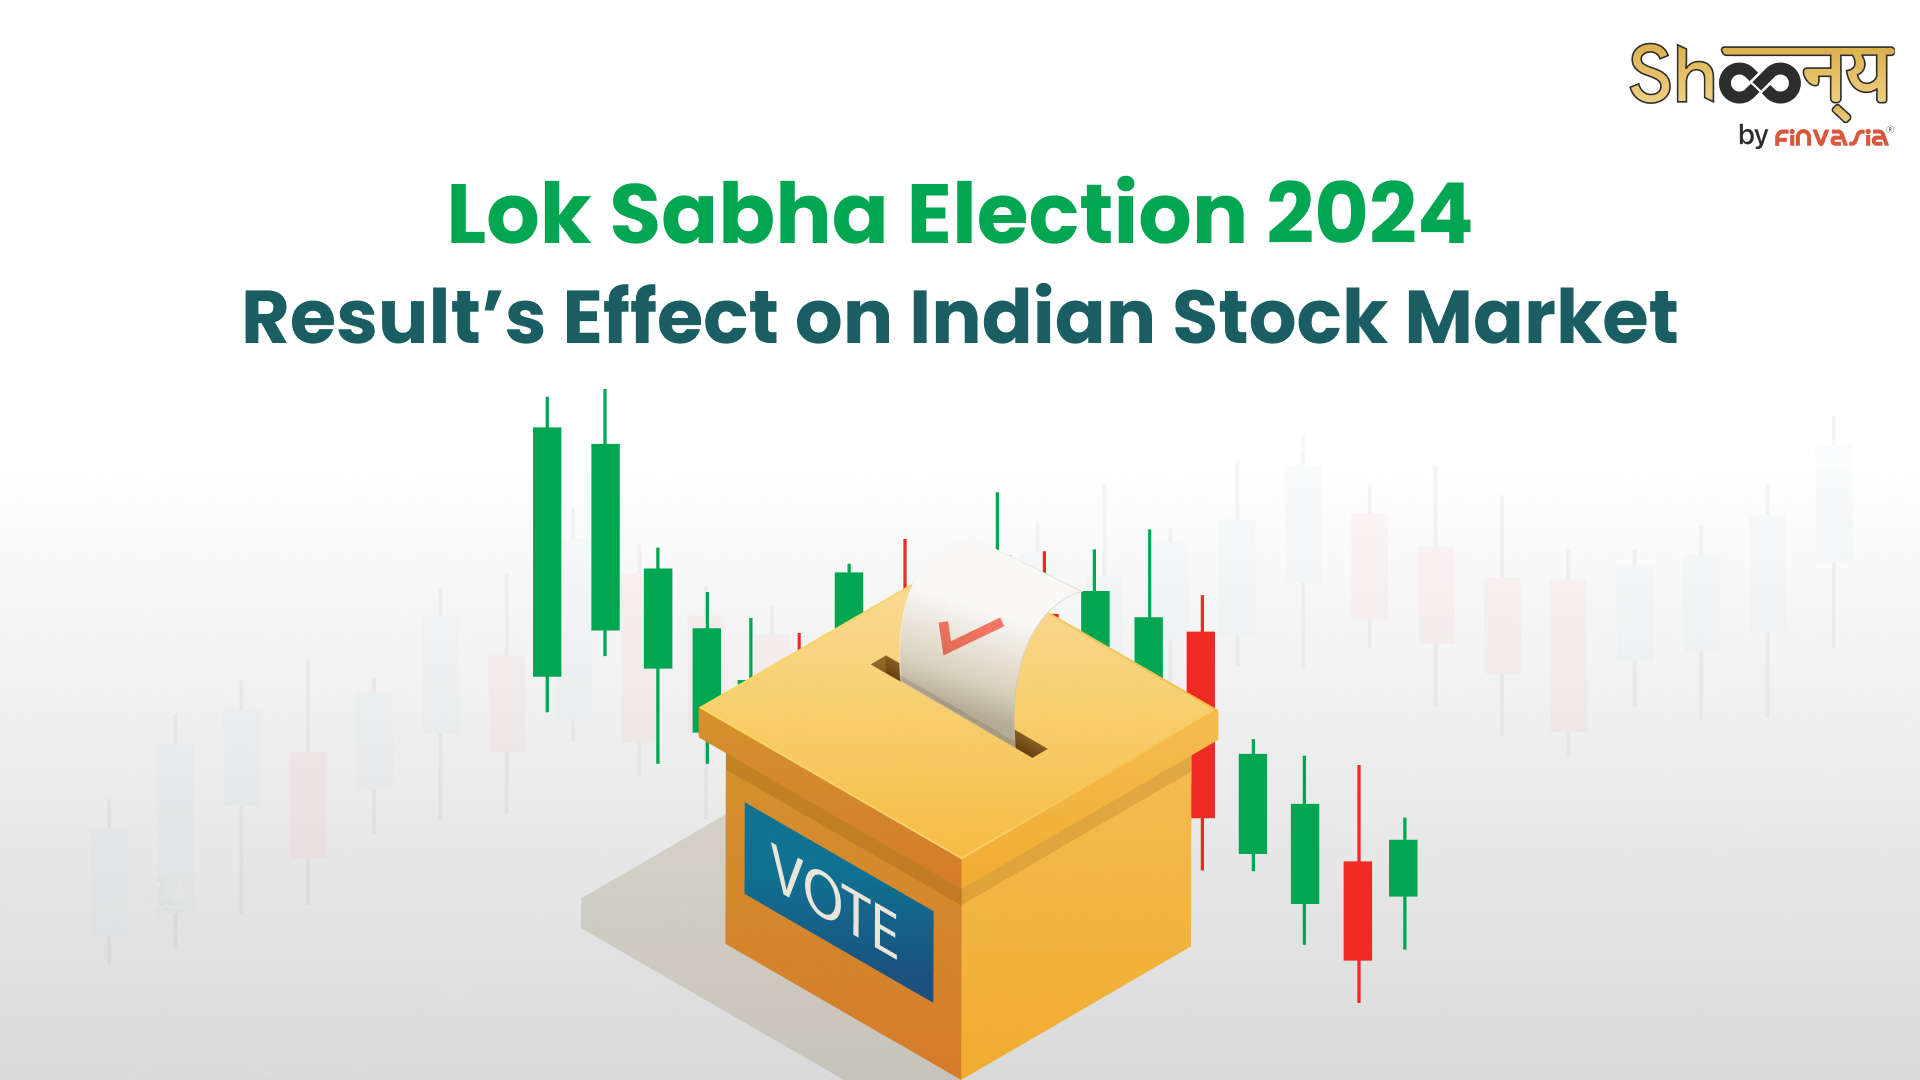 Interpreting Lok Sabha Election Result’s Effect on Stock Market